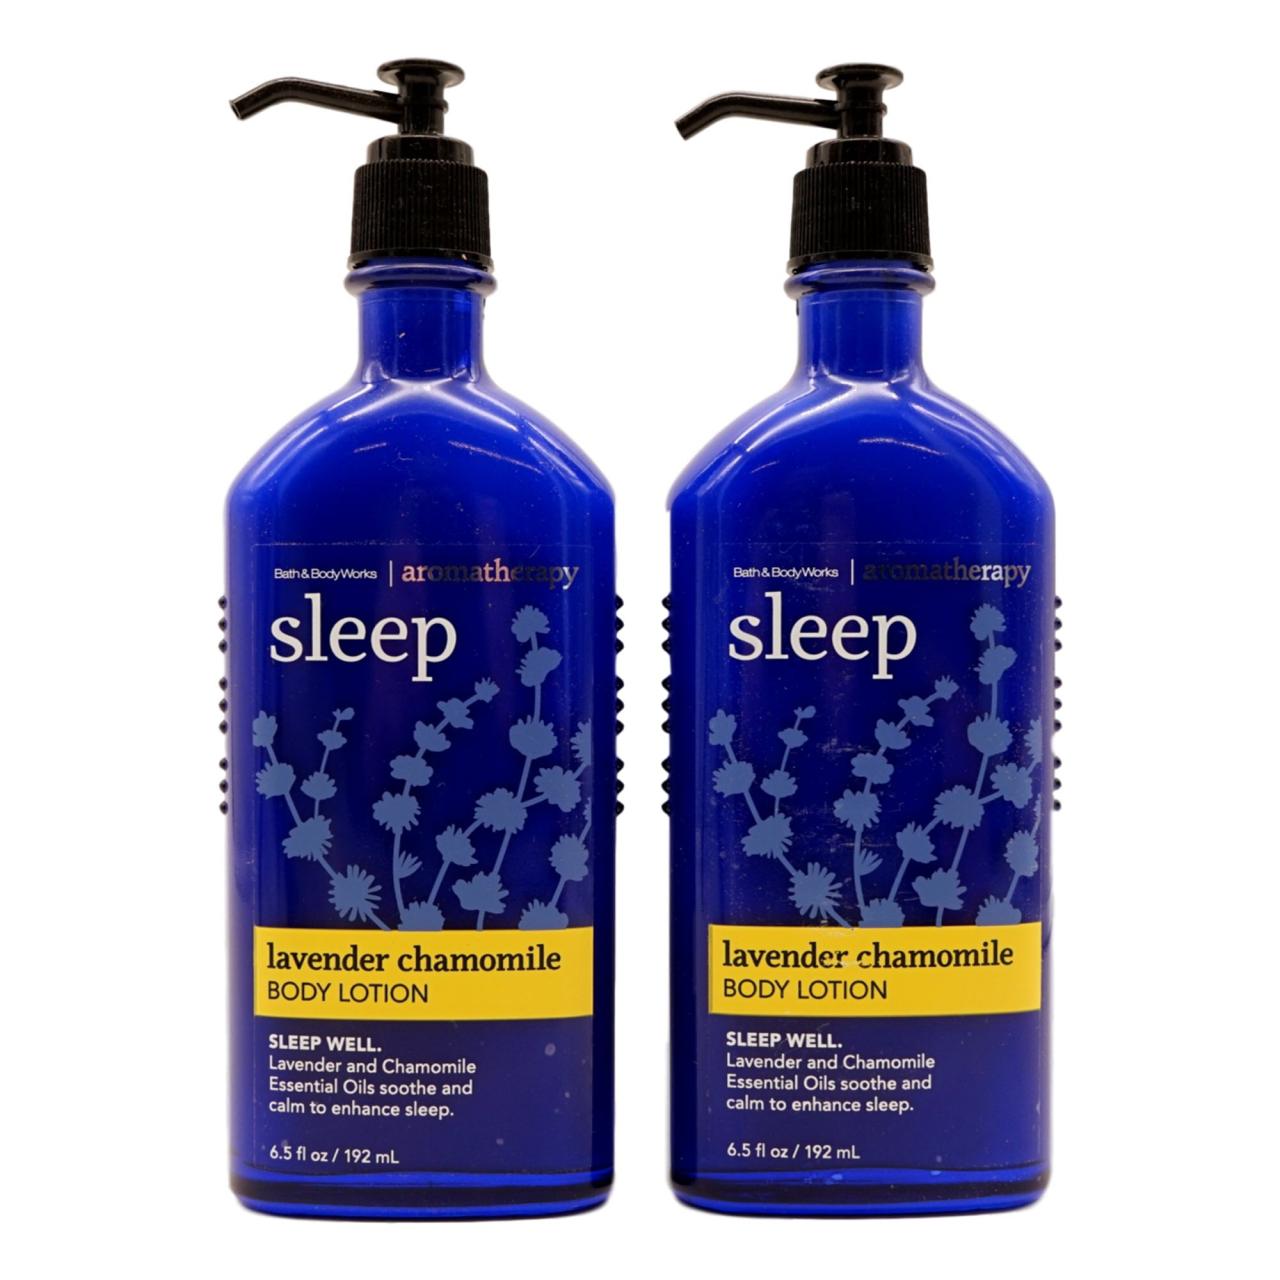 Body bath works lotion sleep night aromatherapy tea time holiday good smell bathandbodyworks perfume bed brand hail queen